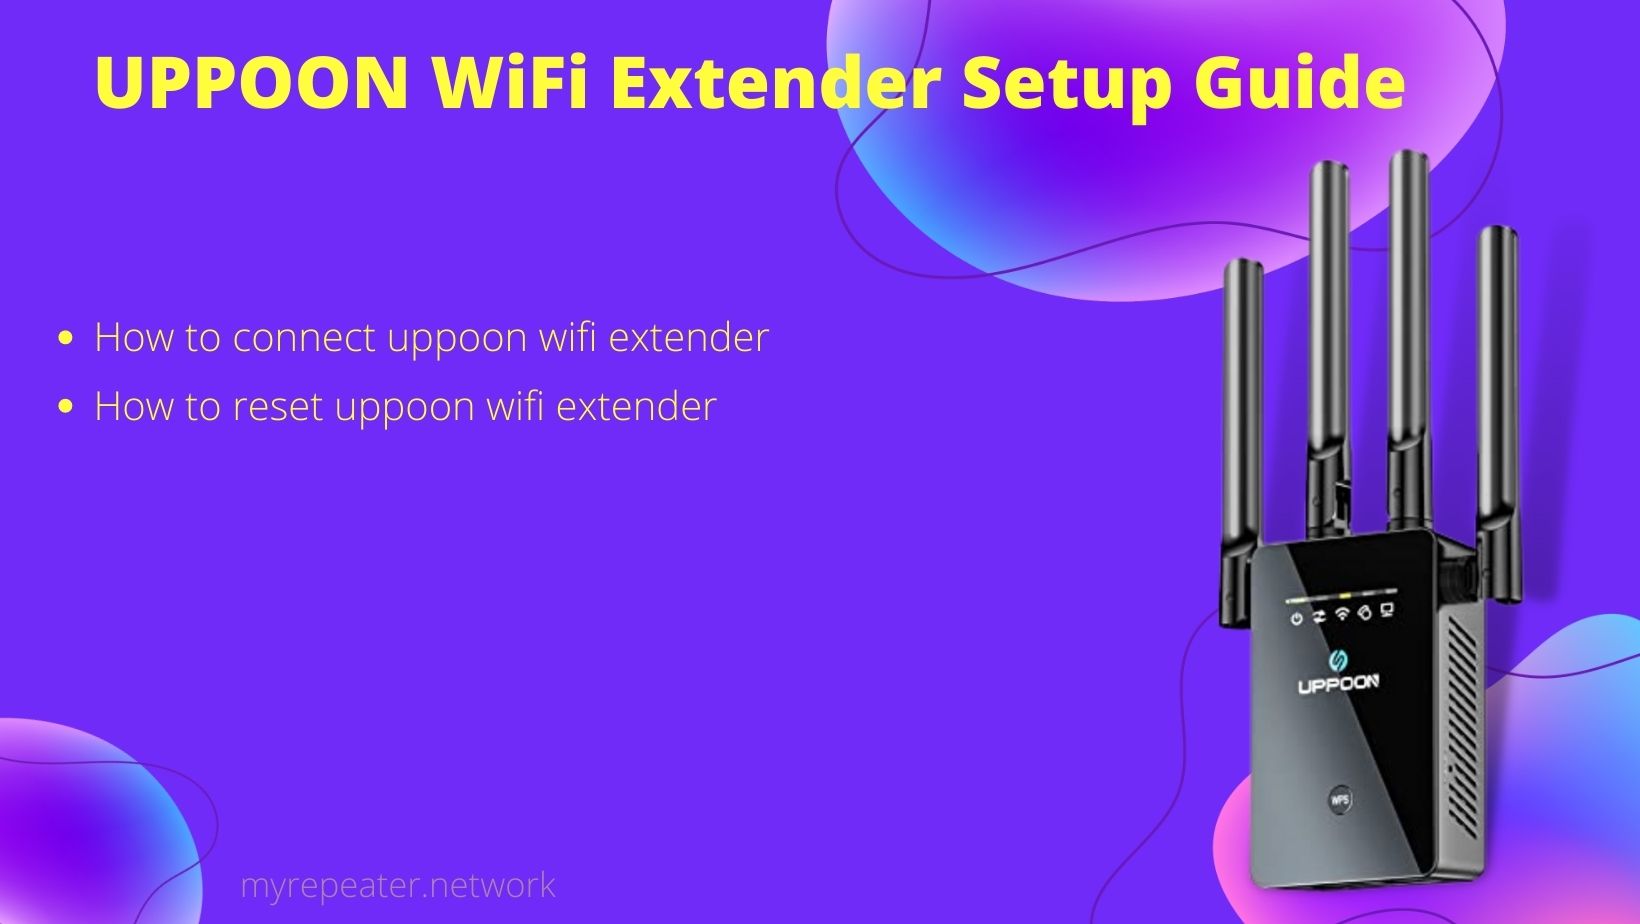 UPPOON WiFi Extender